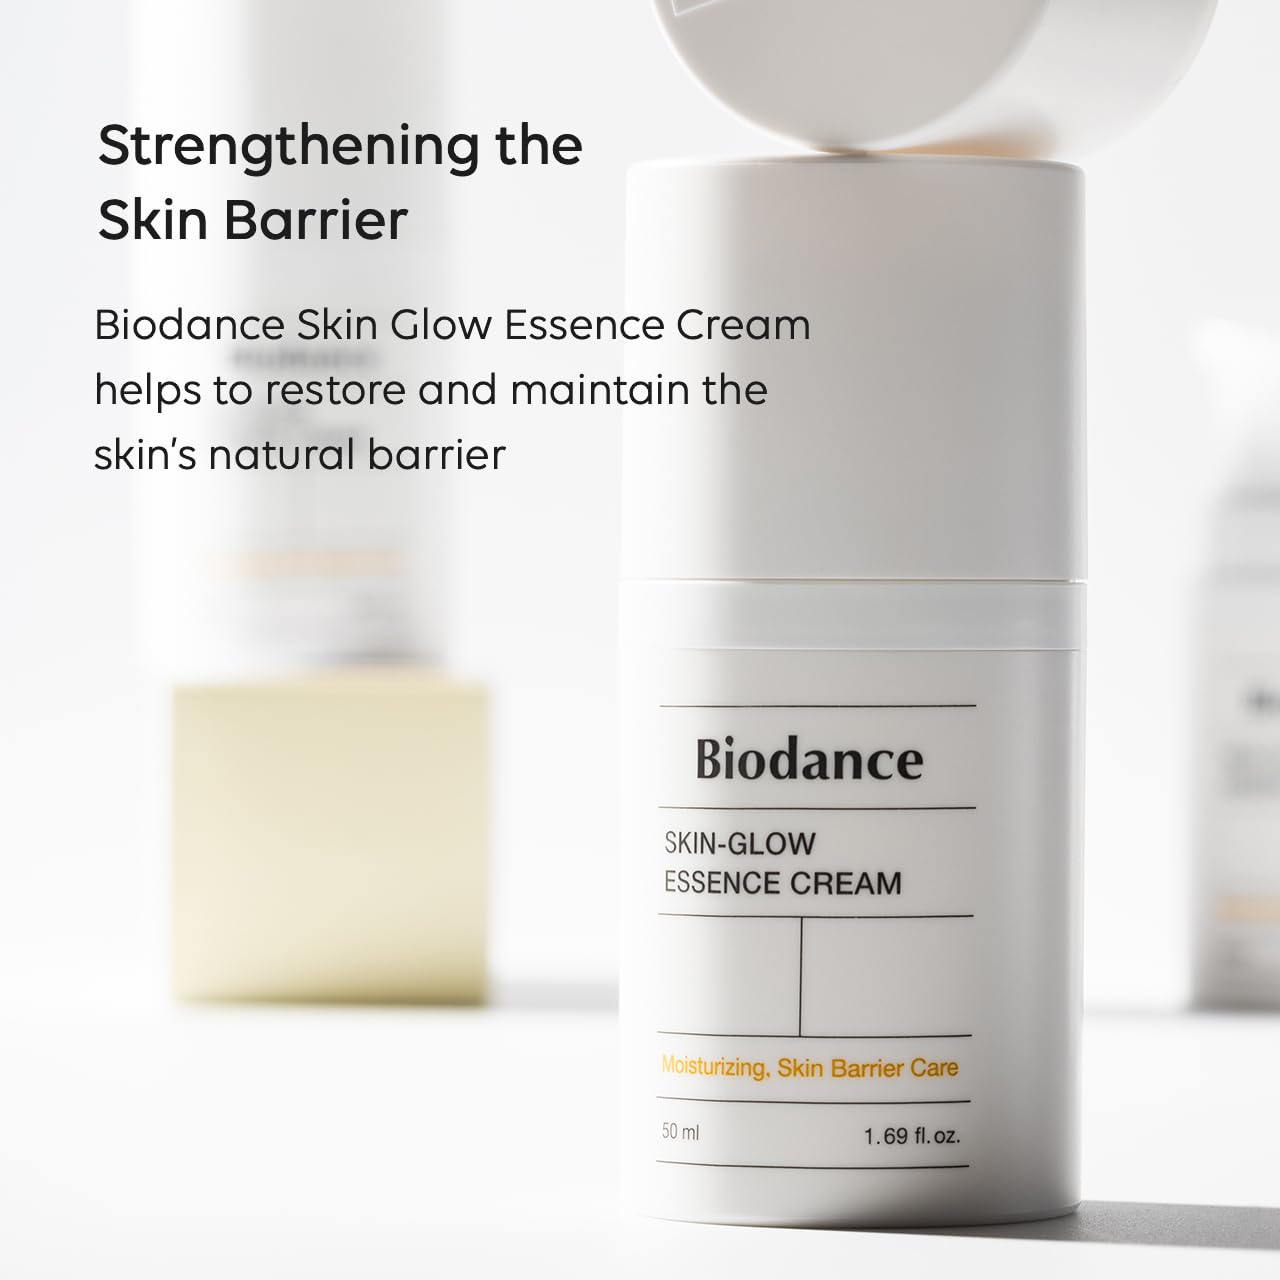 BIODANCE Skin-Glow Essence Cream | Korean Face Cream & Hydrating Facial Moisturizer with Ceramides, Probiotics, Hyaluronic Acid for Face | 1.69 fl.oz, 50ml